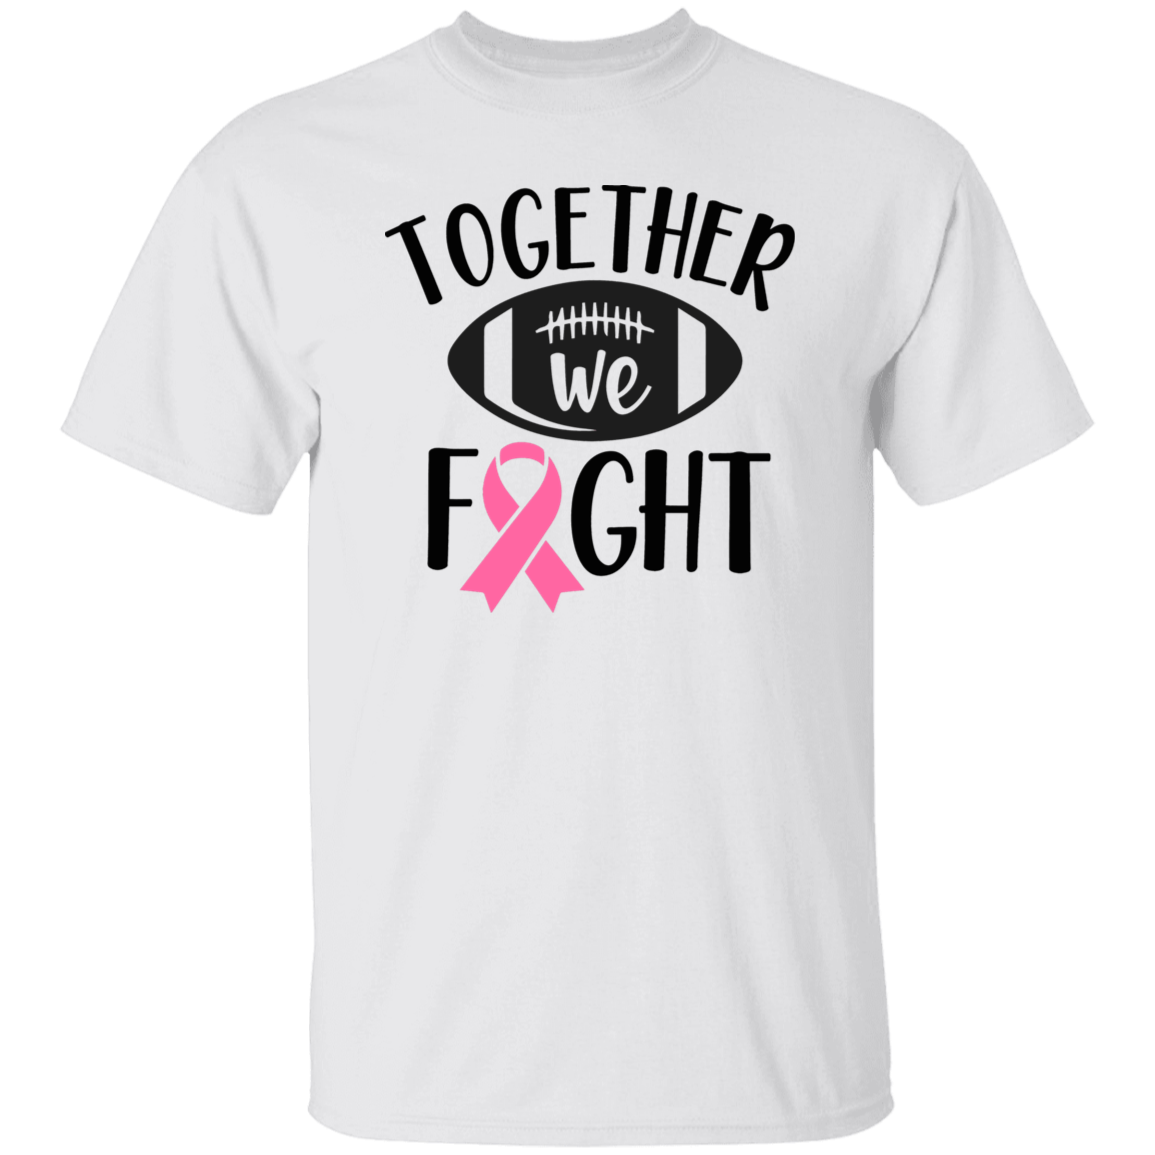 Together We Fight I T-SHIRT I Breast Cancer Awareness